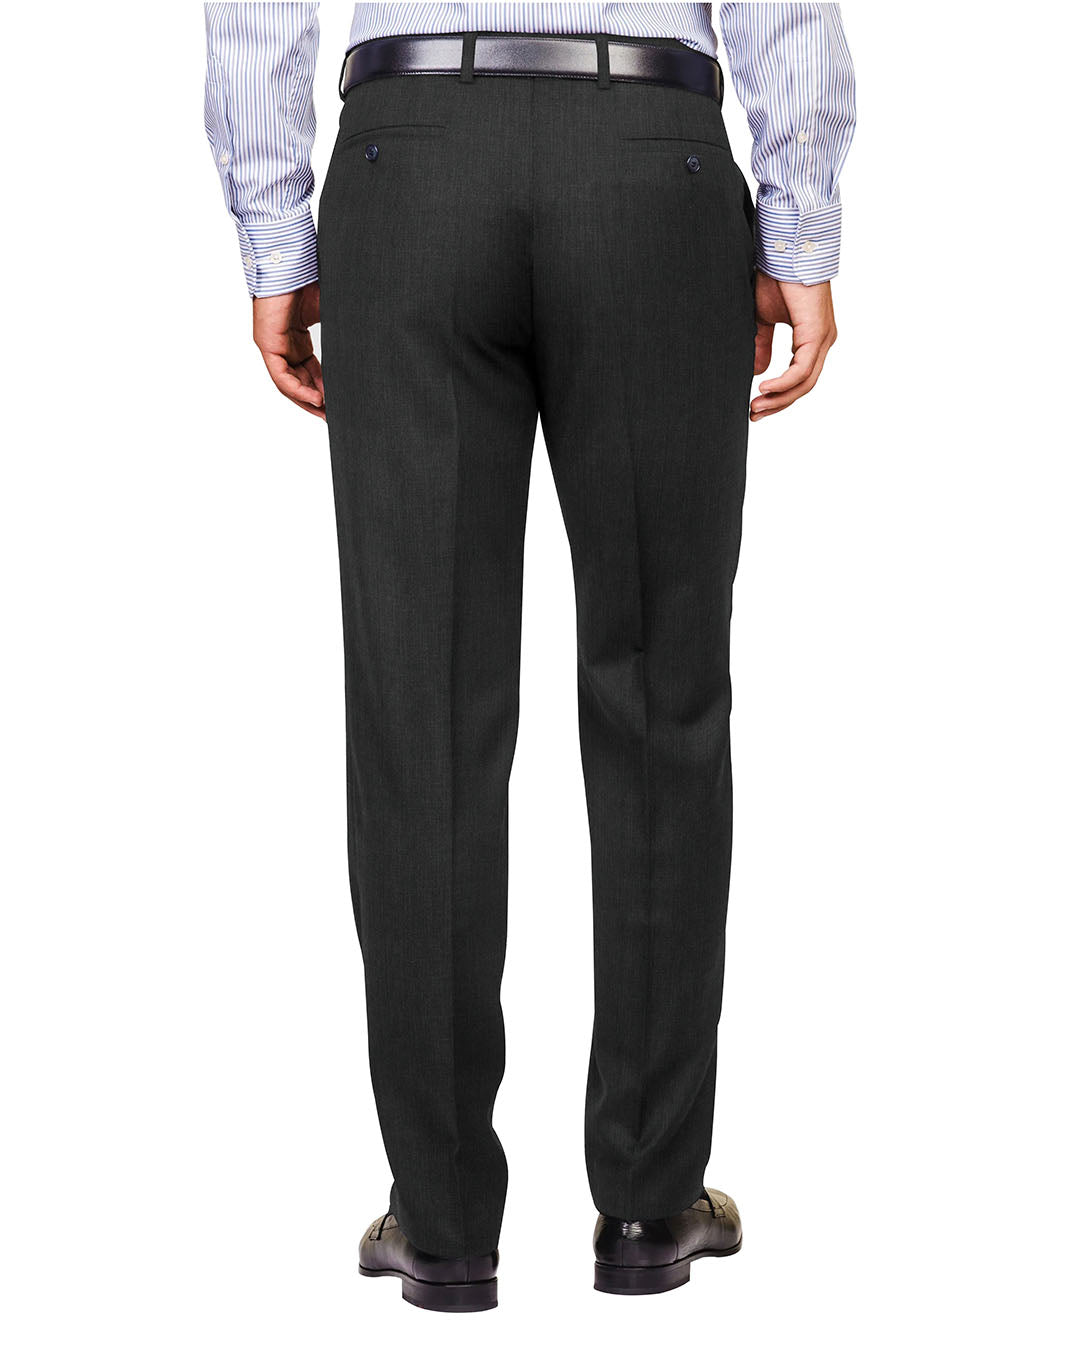 Washable Wool Pants: Plain Charcoal Grey